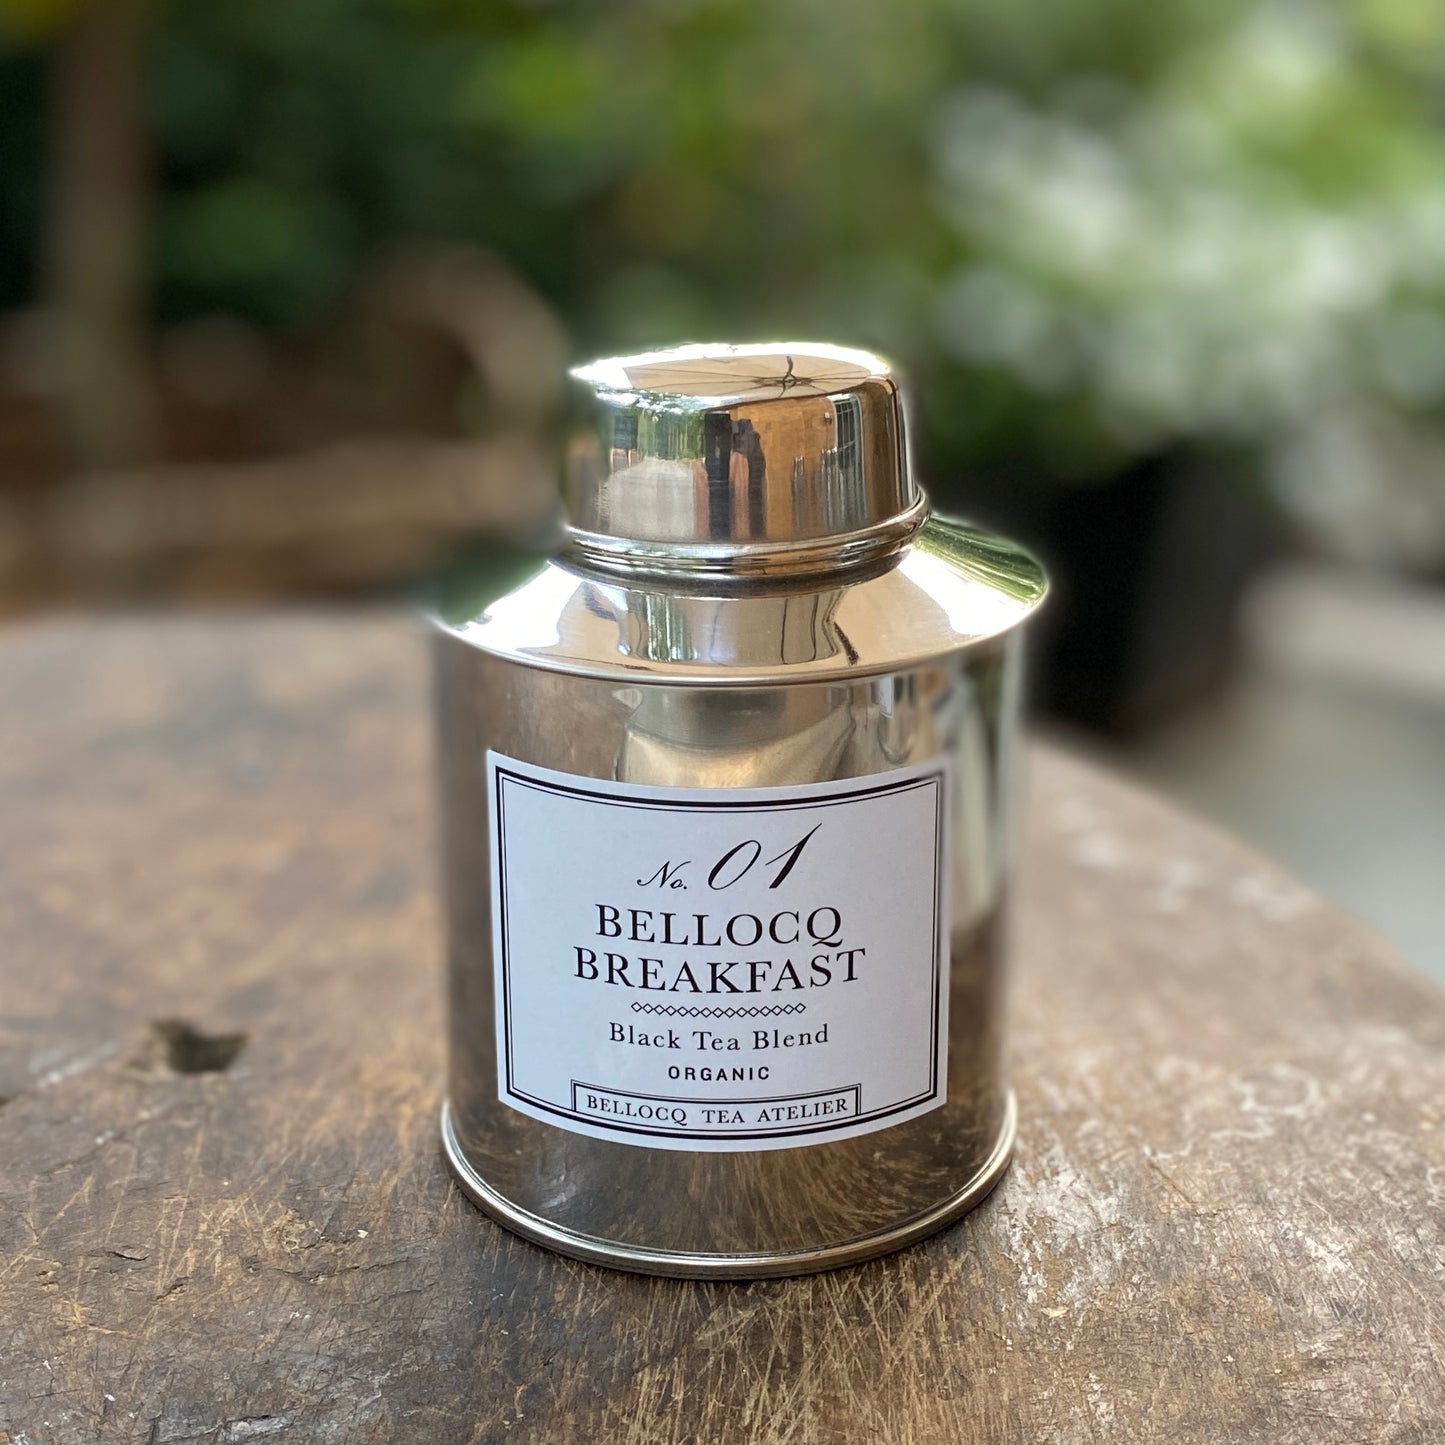 Bellocq Tea No. 01, Bellocq Breakfast